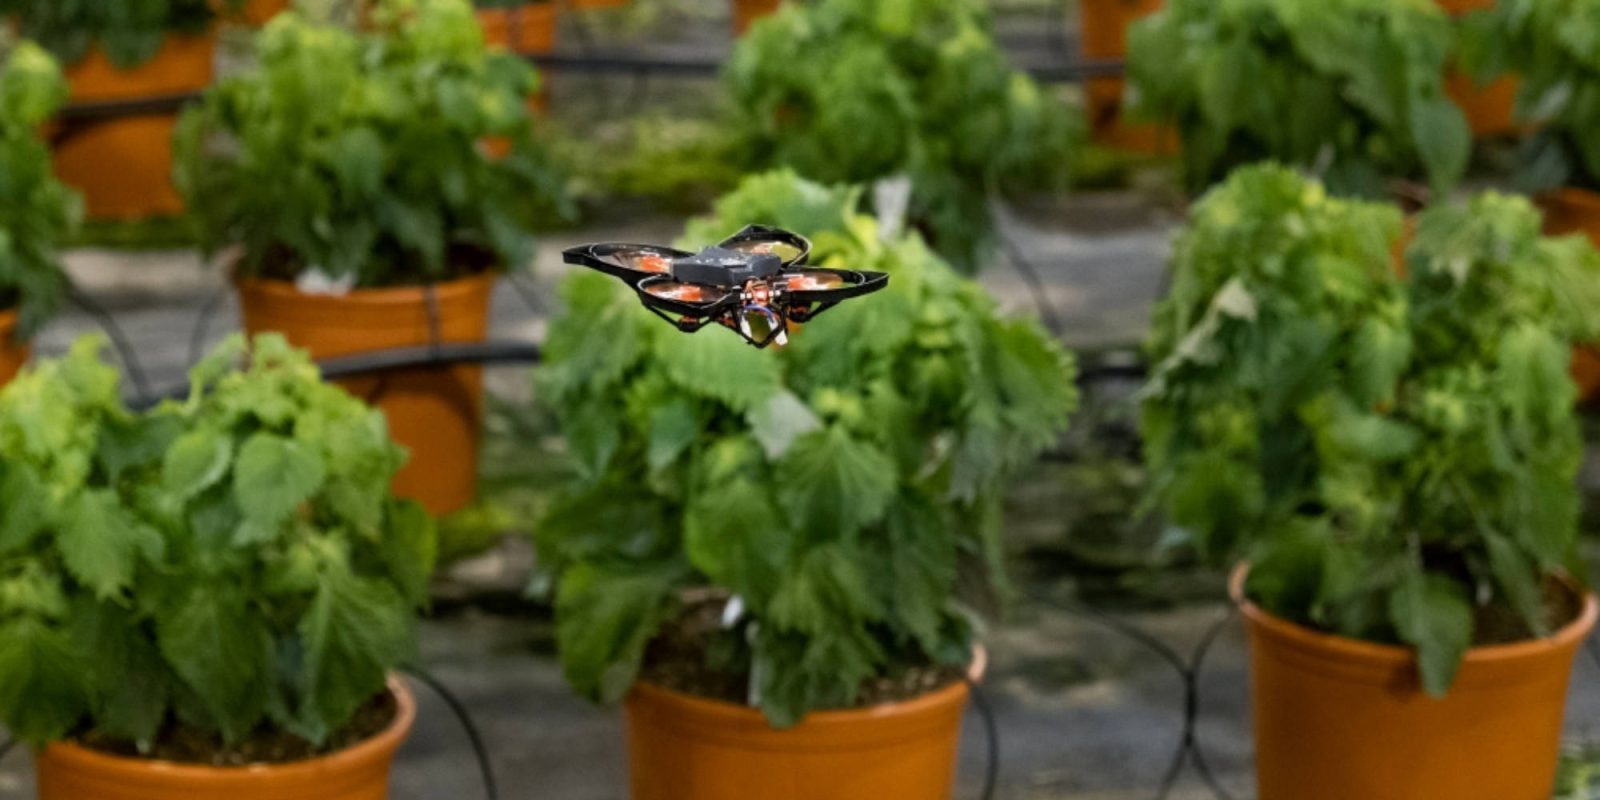 Drones crops moths